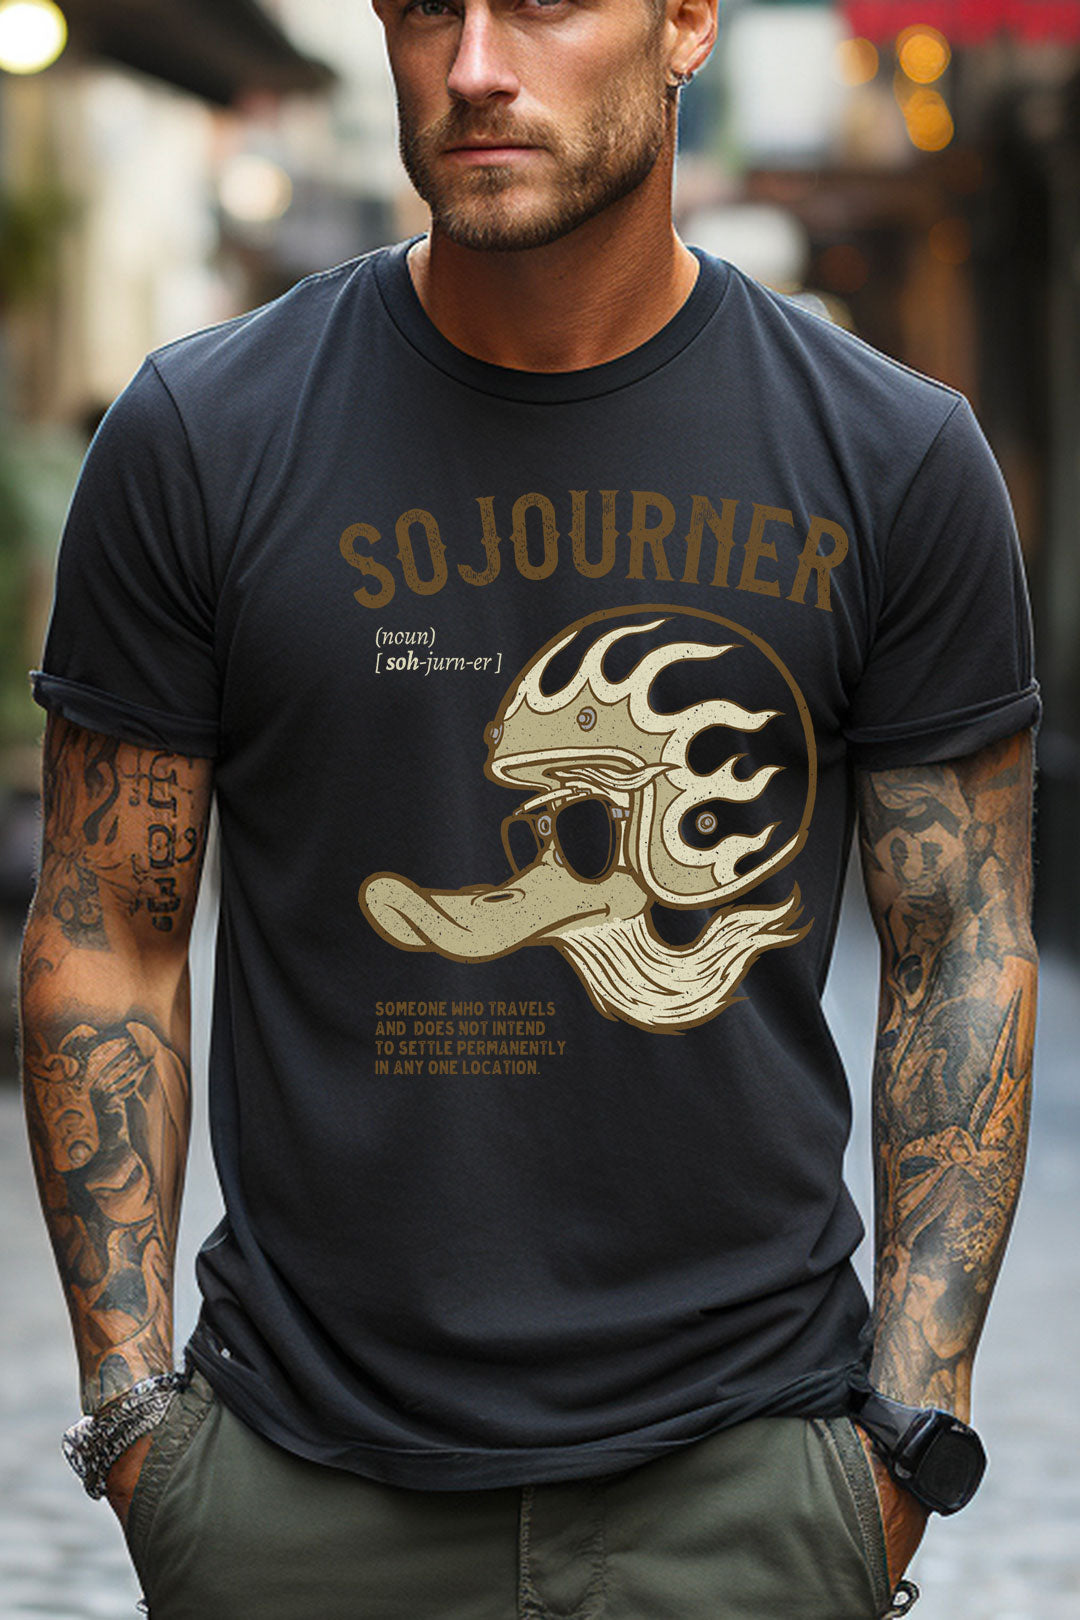  Sojourner Biker T-shirt Travel Tourer motorcycle Shirt Journey Adventure Road Trip Gear Shirt Biker Geek Gift For Him Retro Motorcycle Shirt